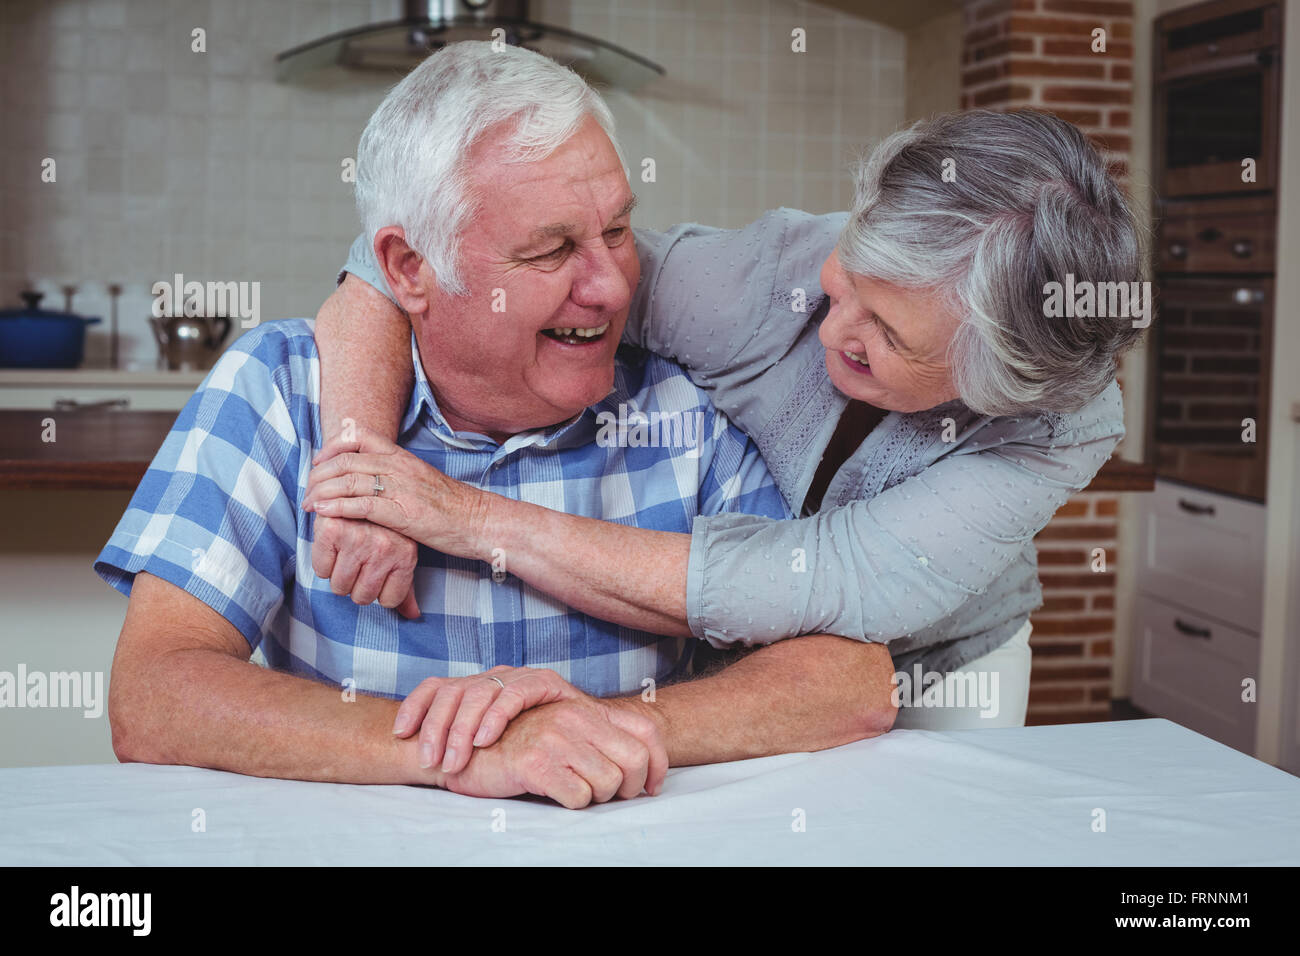 Romantic senior couple embracing in kitchen Stock Photo